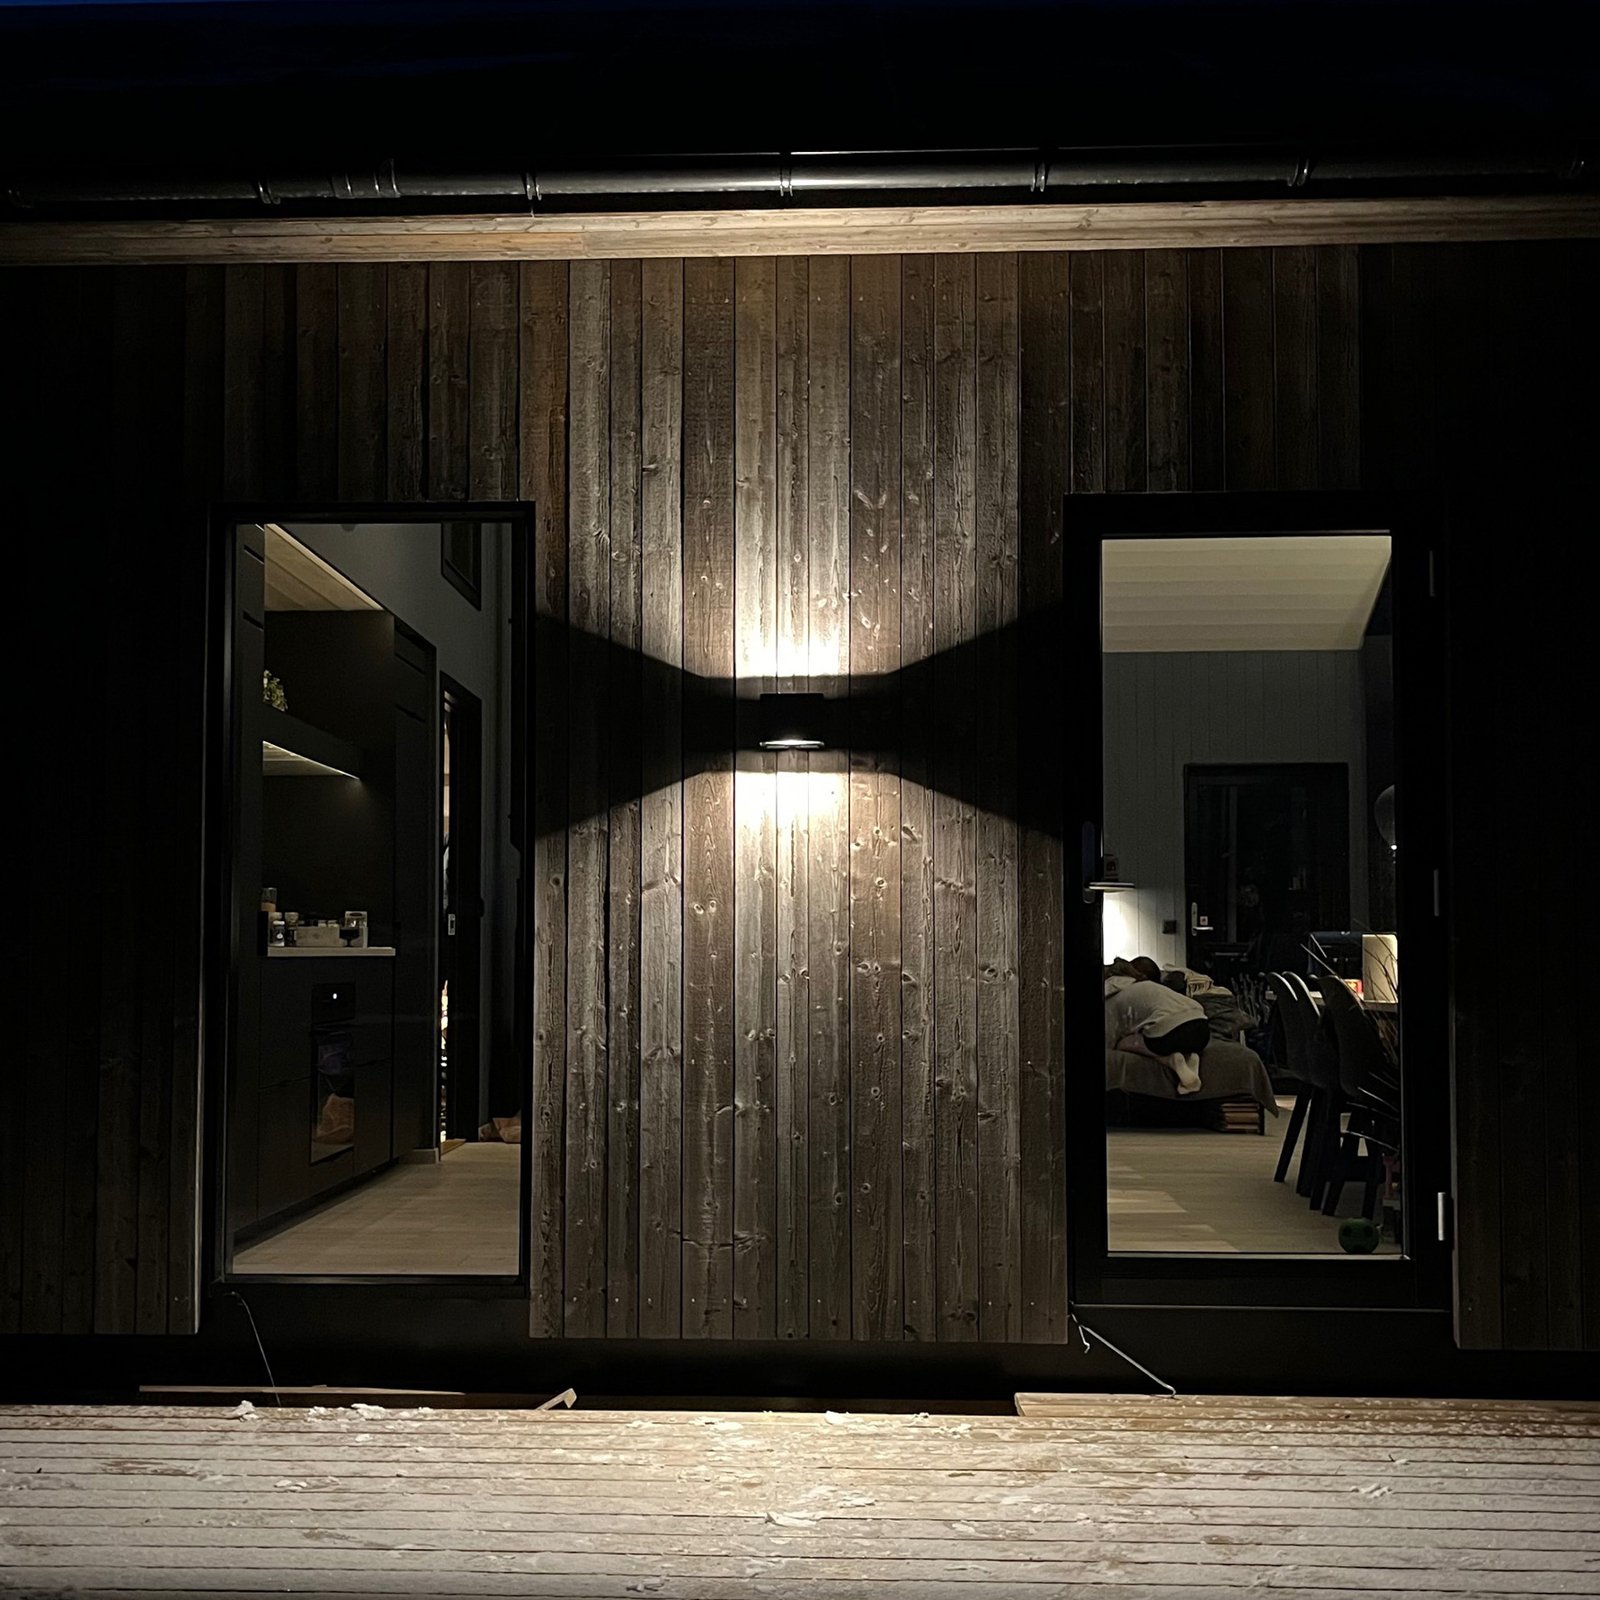 SLC Shadow LED buitenwandlamp up/down 2 x Schuko